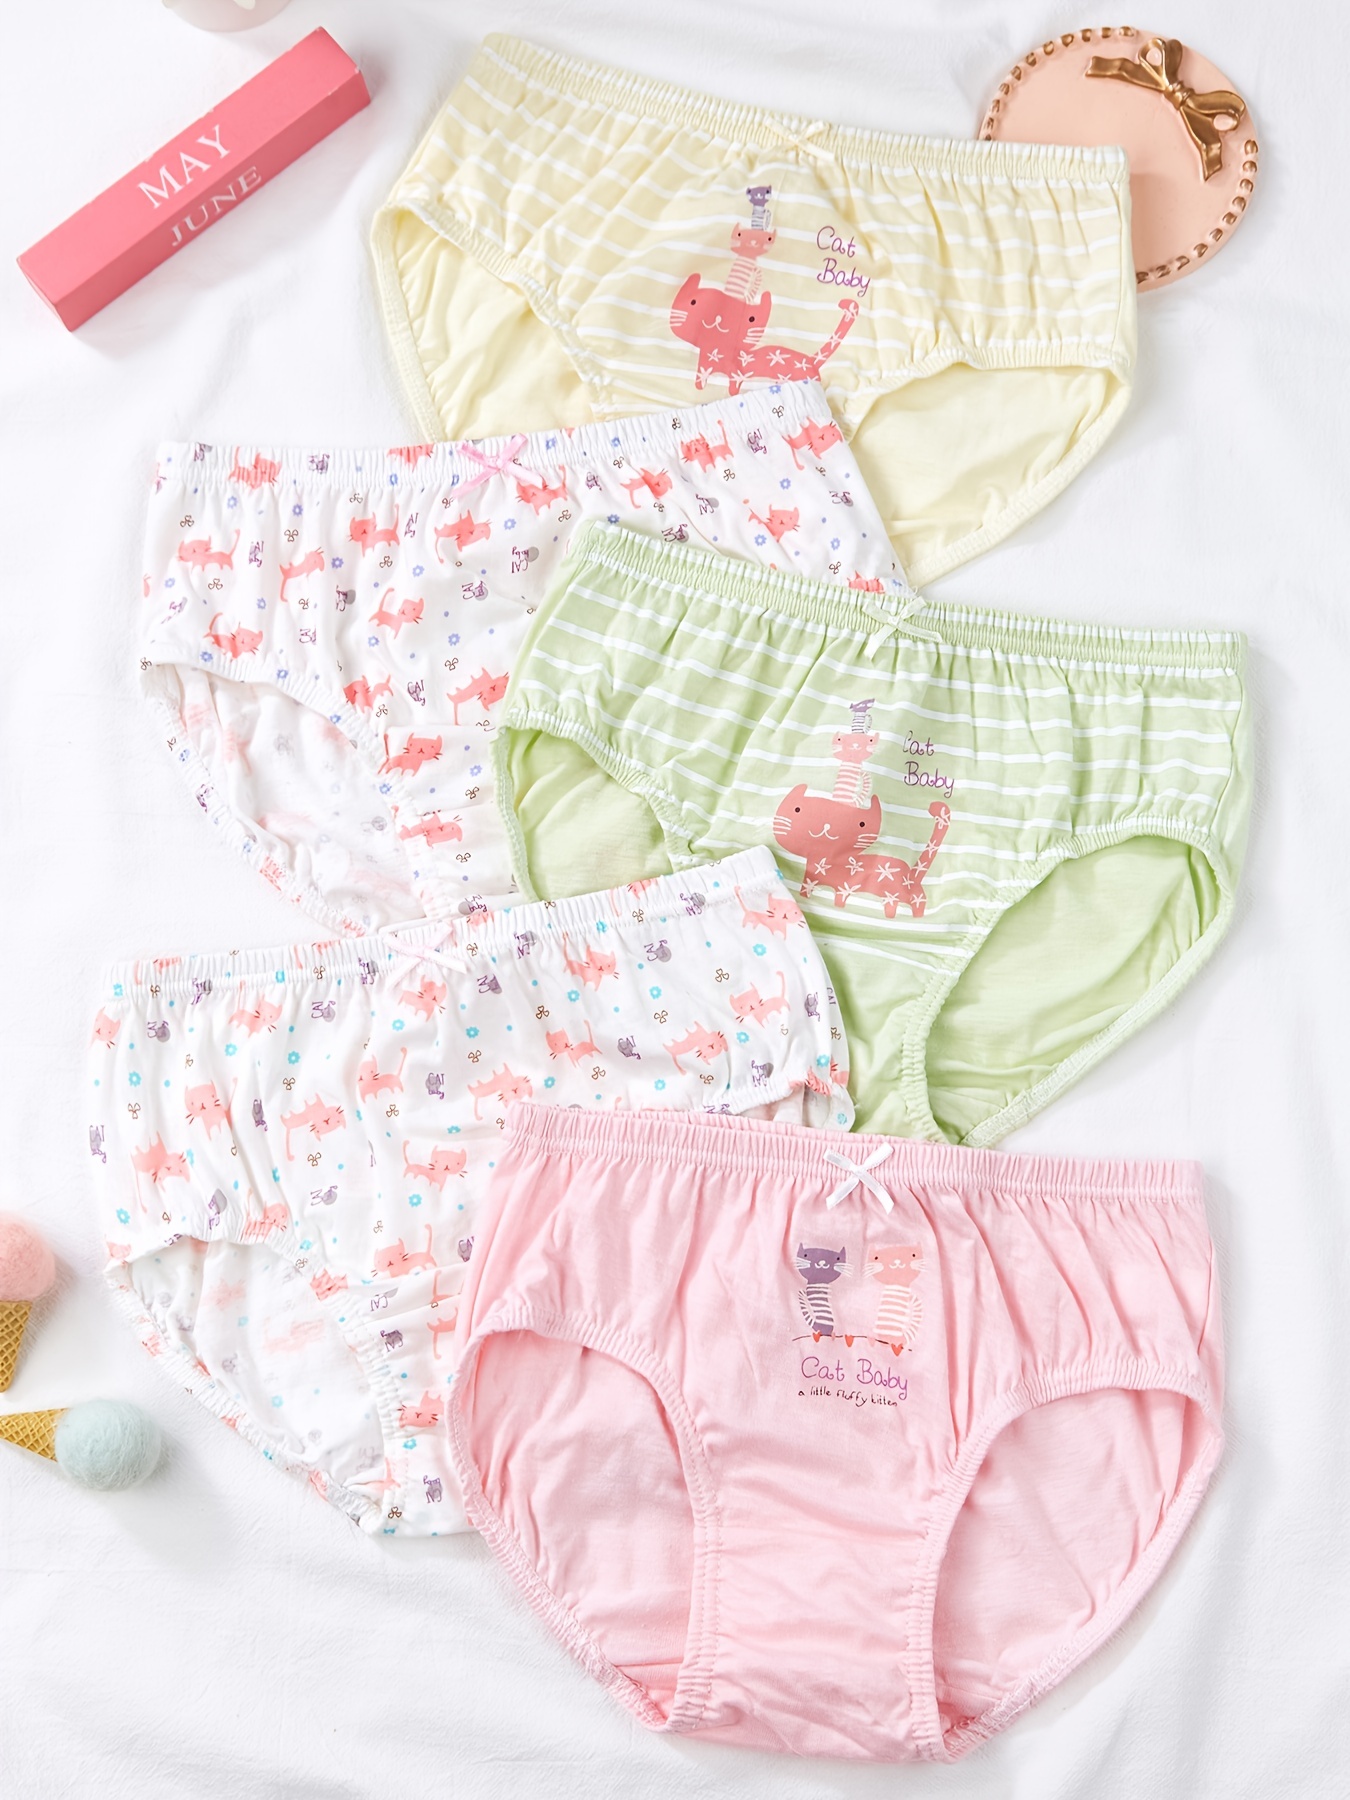 5 pcs soft cotton girls underwear baby panties good quality